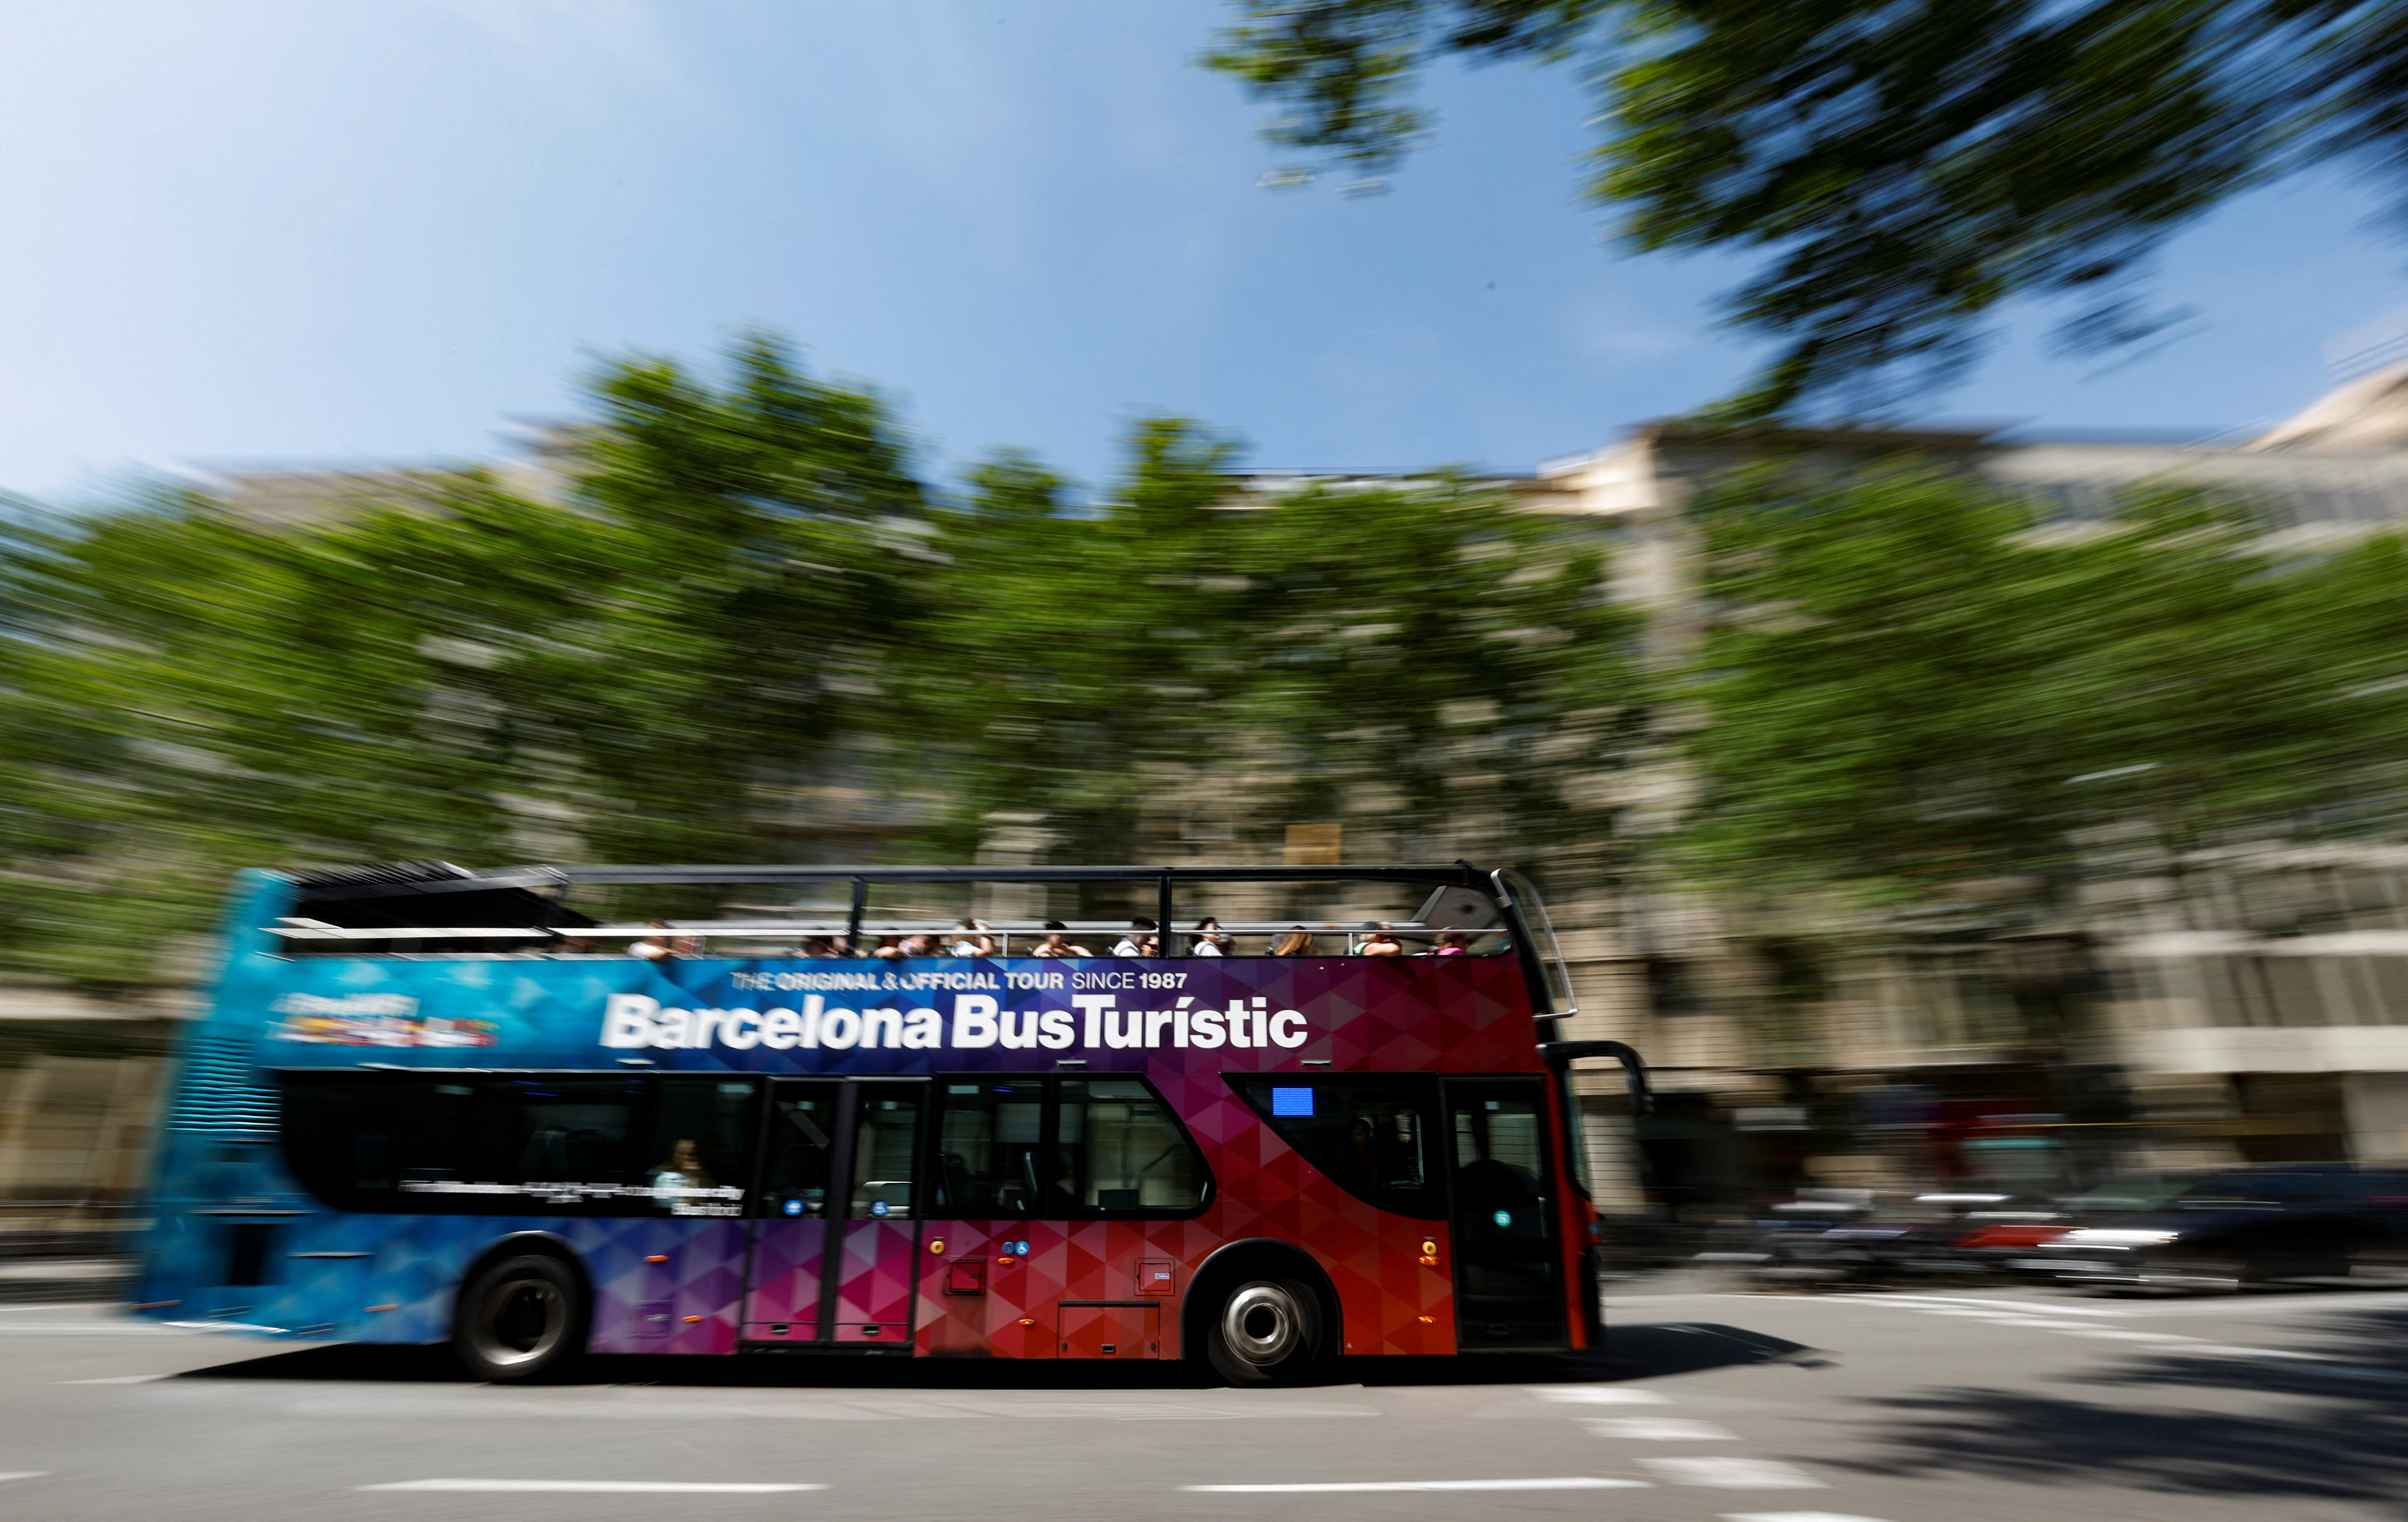 A tourist bus passes by Passeig de Gracia in Barcelona